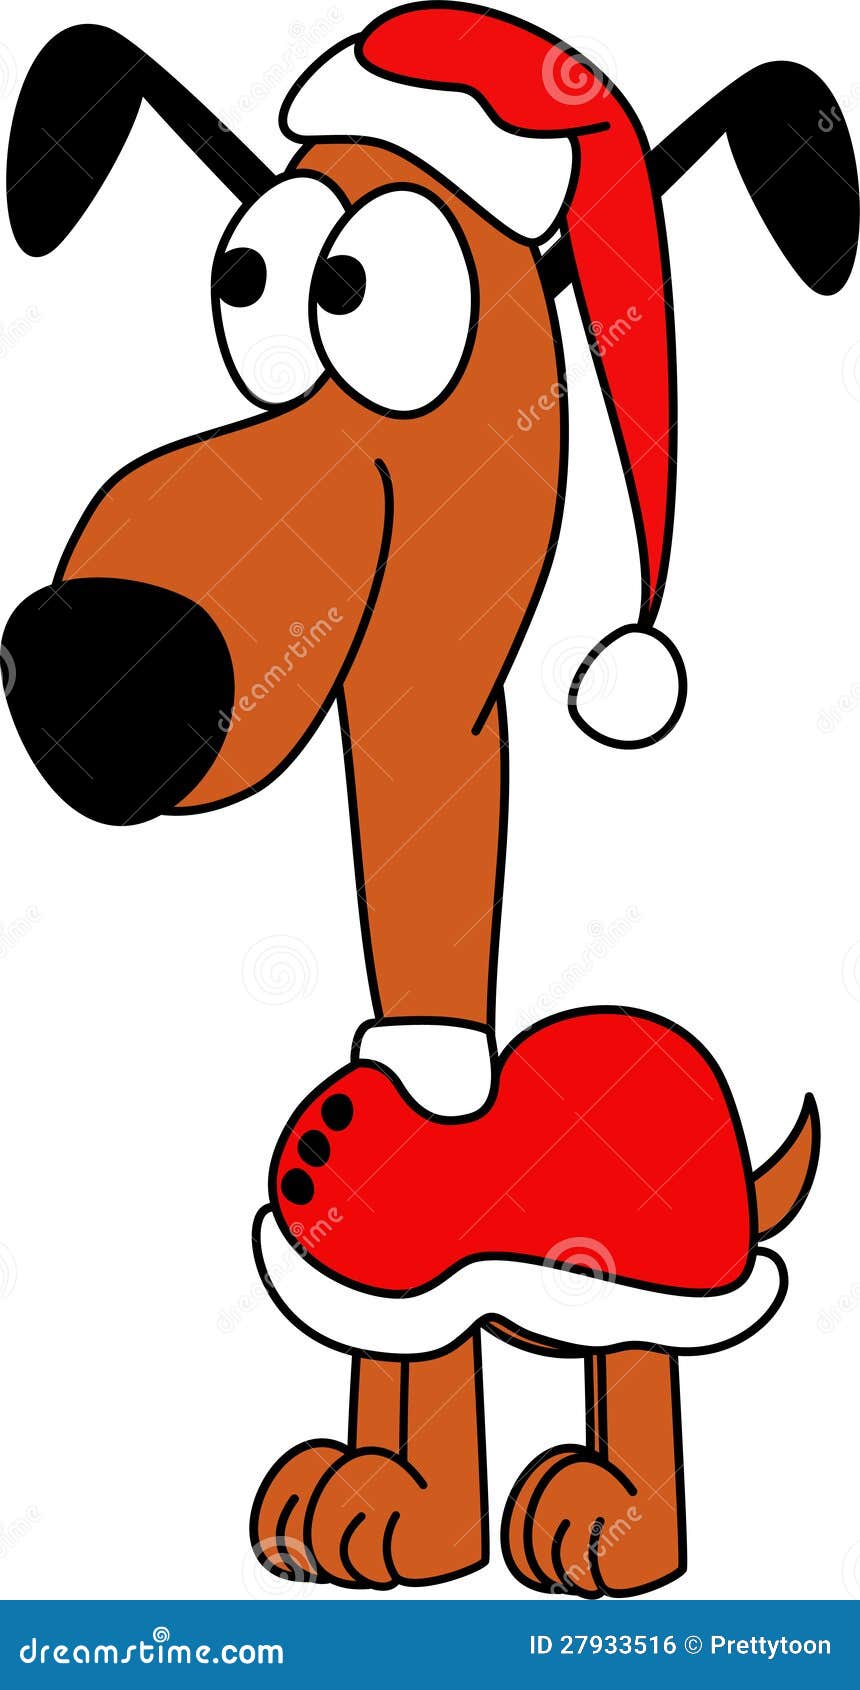 Cute Christmas Dog Cartoon Royalty Free Stock Image - Image: 27933516